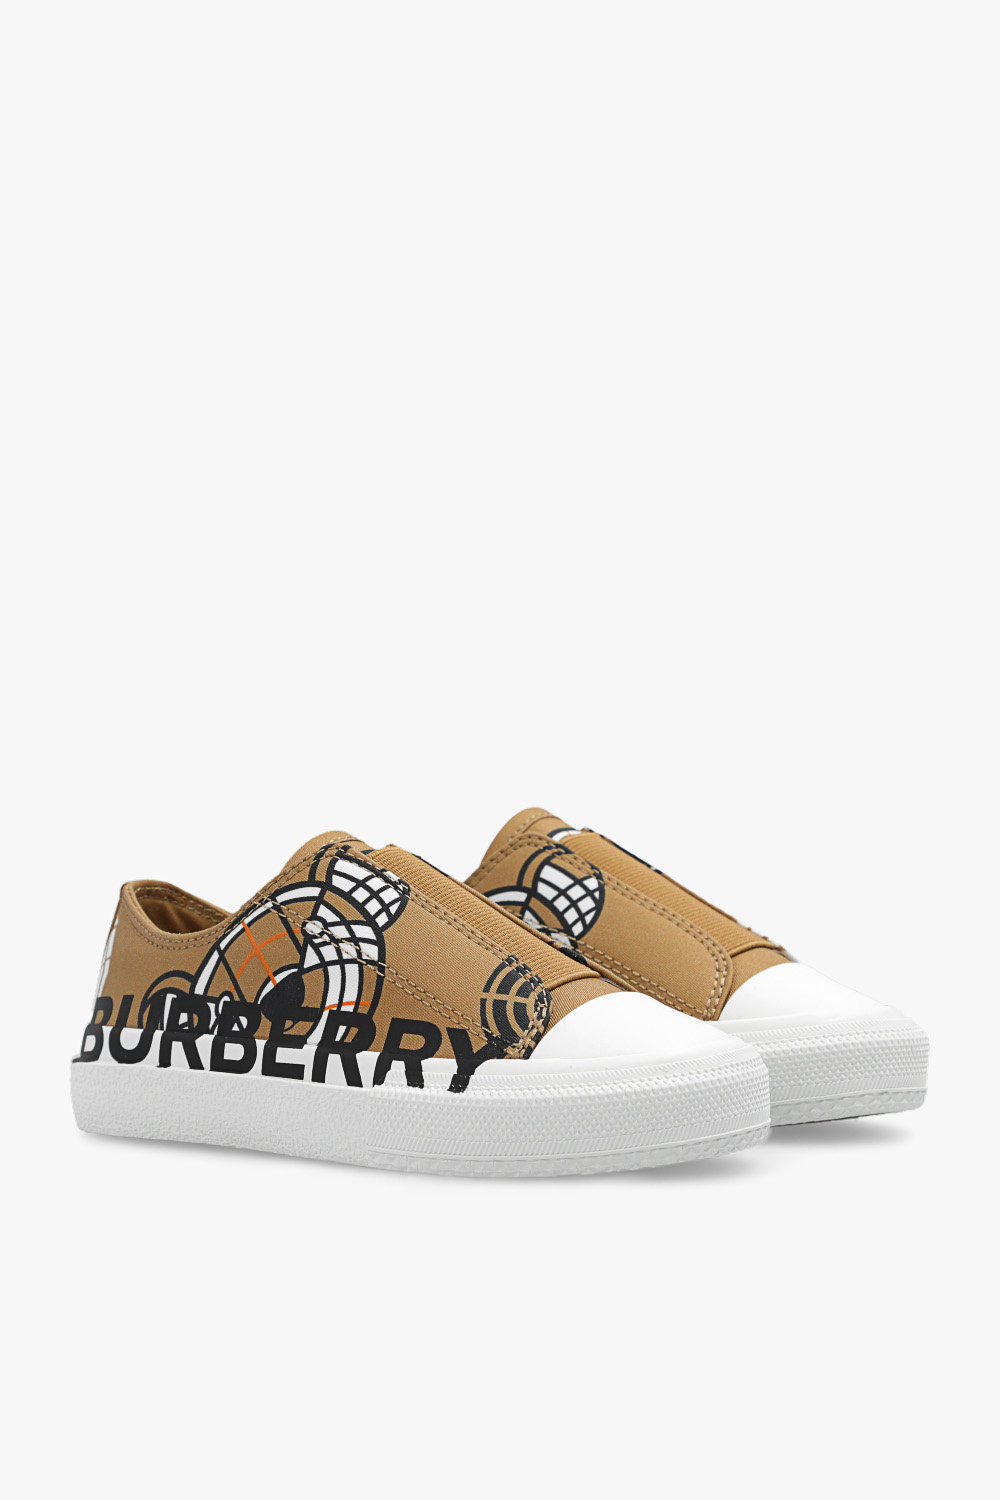 Burberry Kids ‘Larkhall’ sneakers